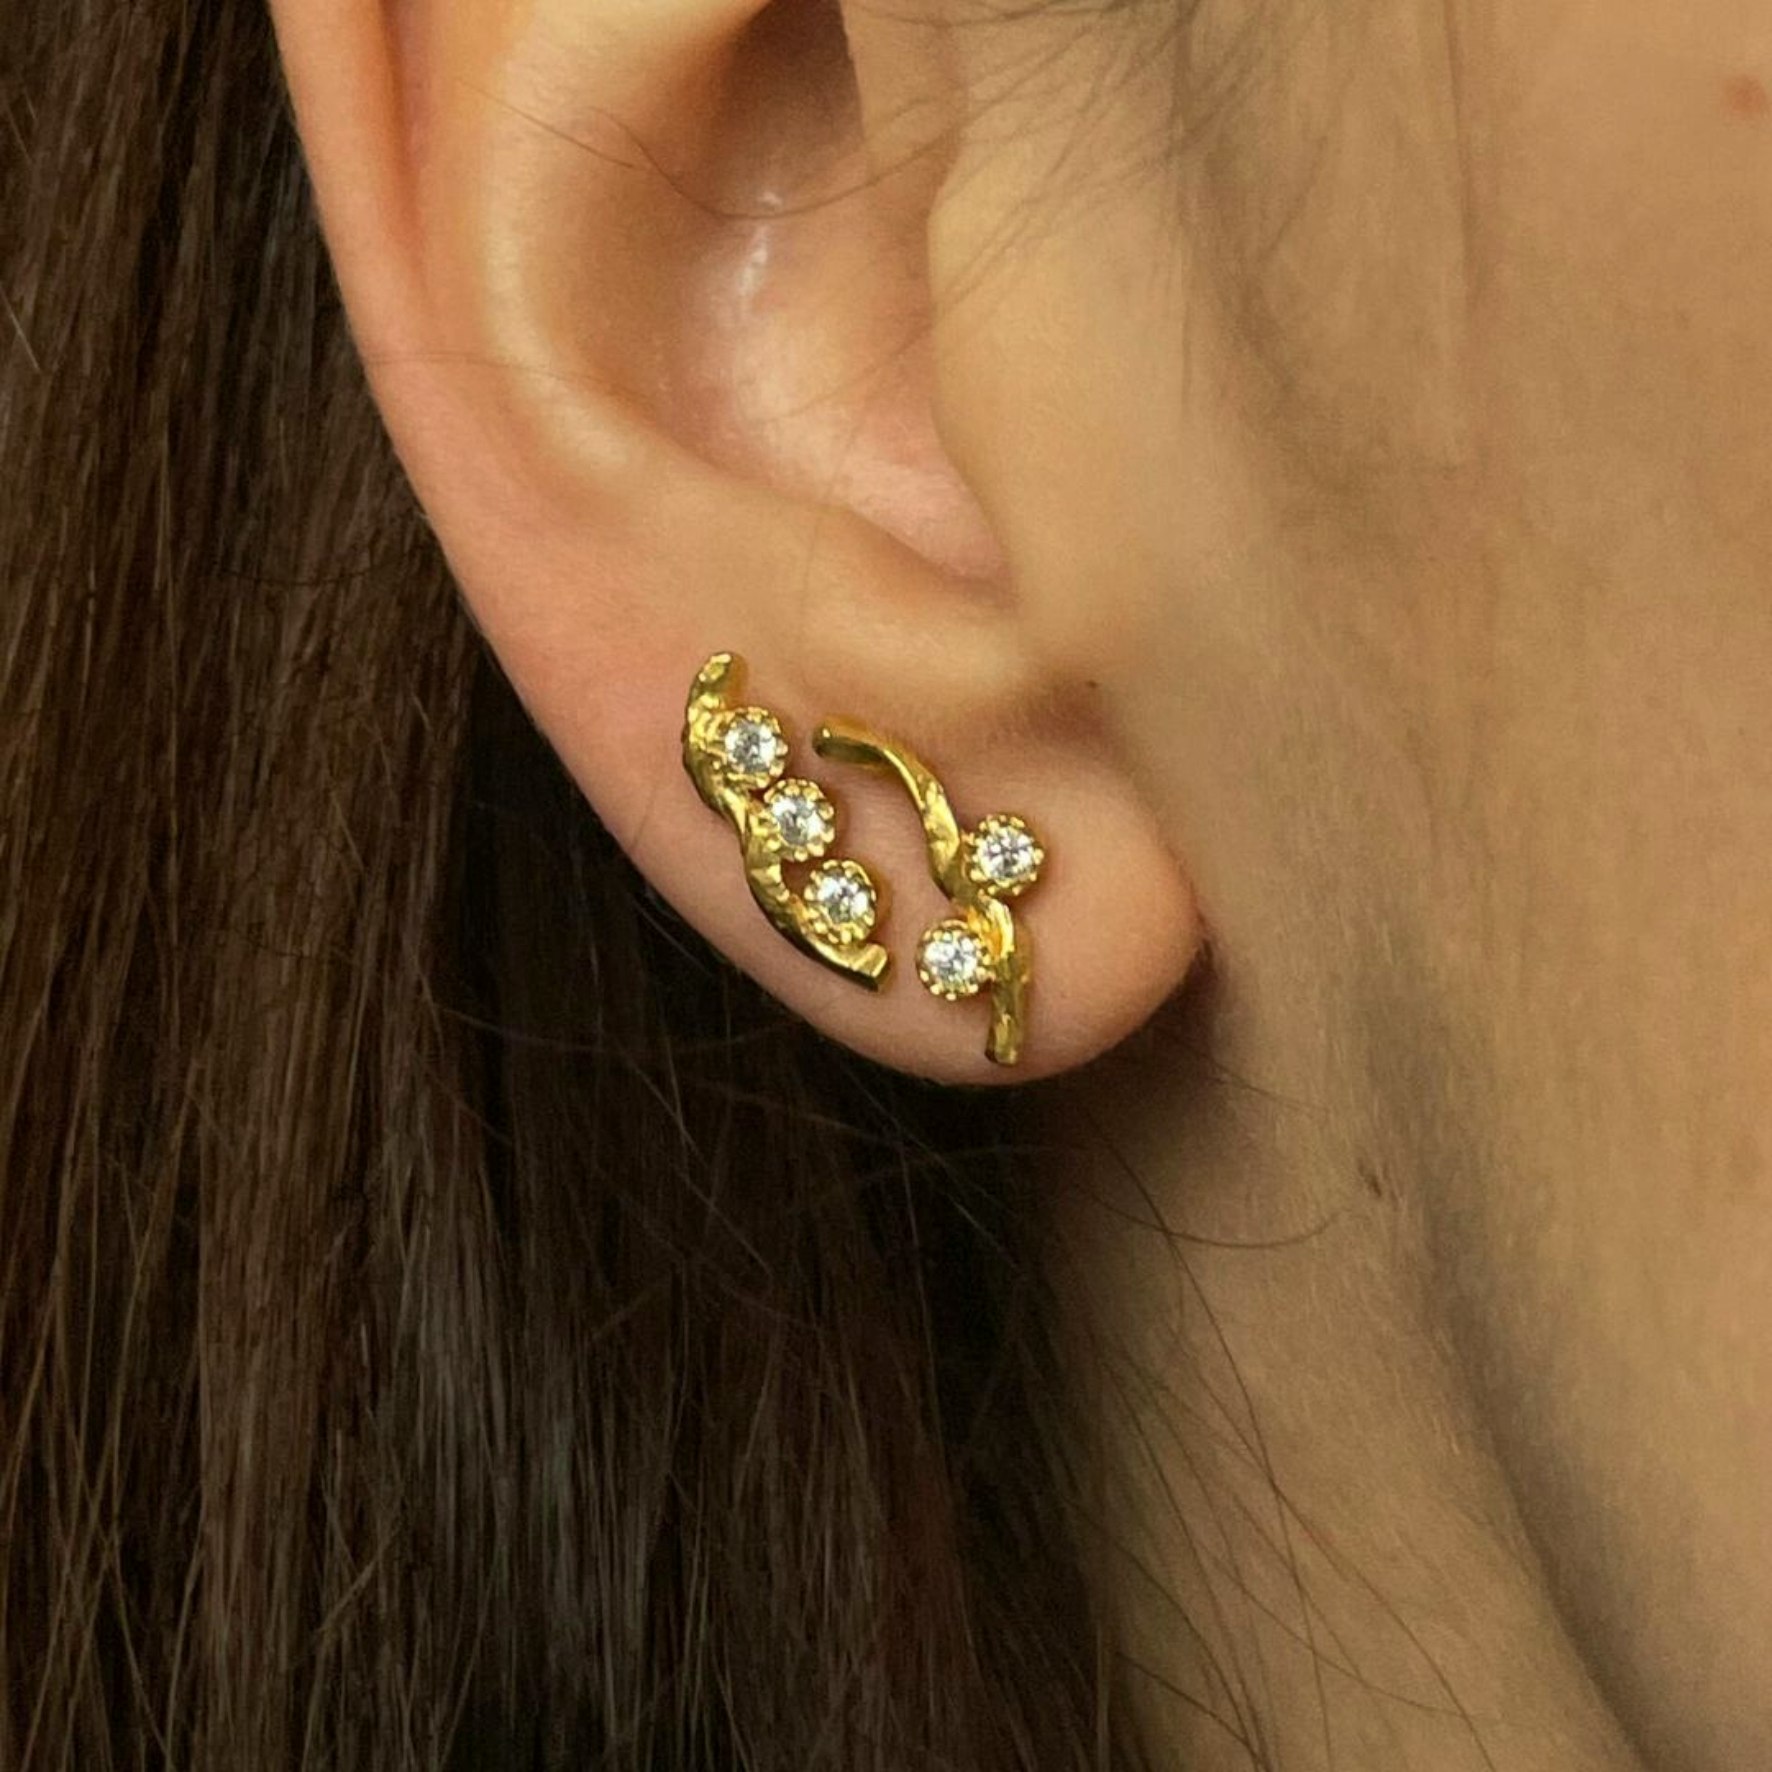 Flow Earring With Three Stones från STINE A Jewelry i Förgyllt-Silver Sterling 925